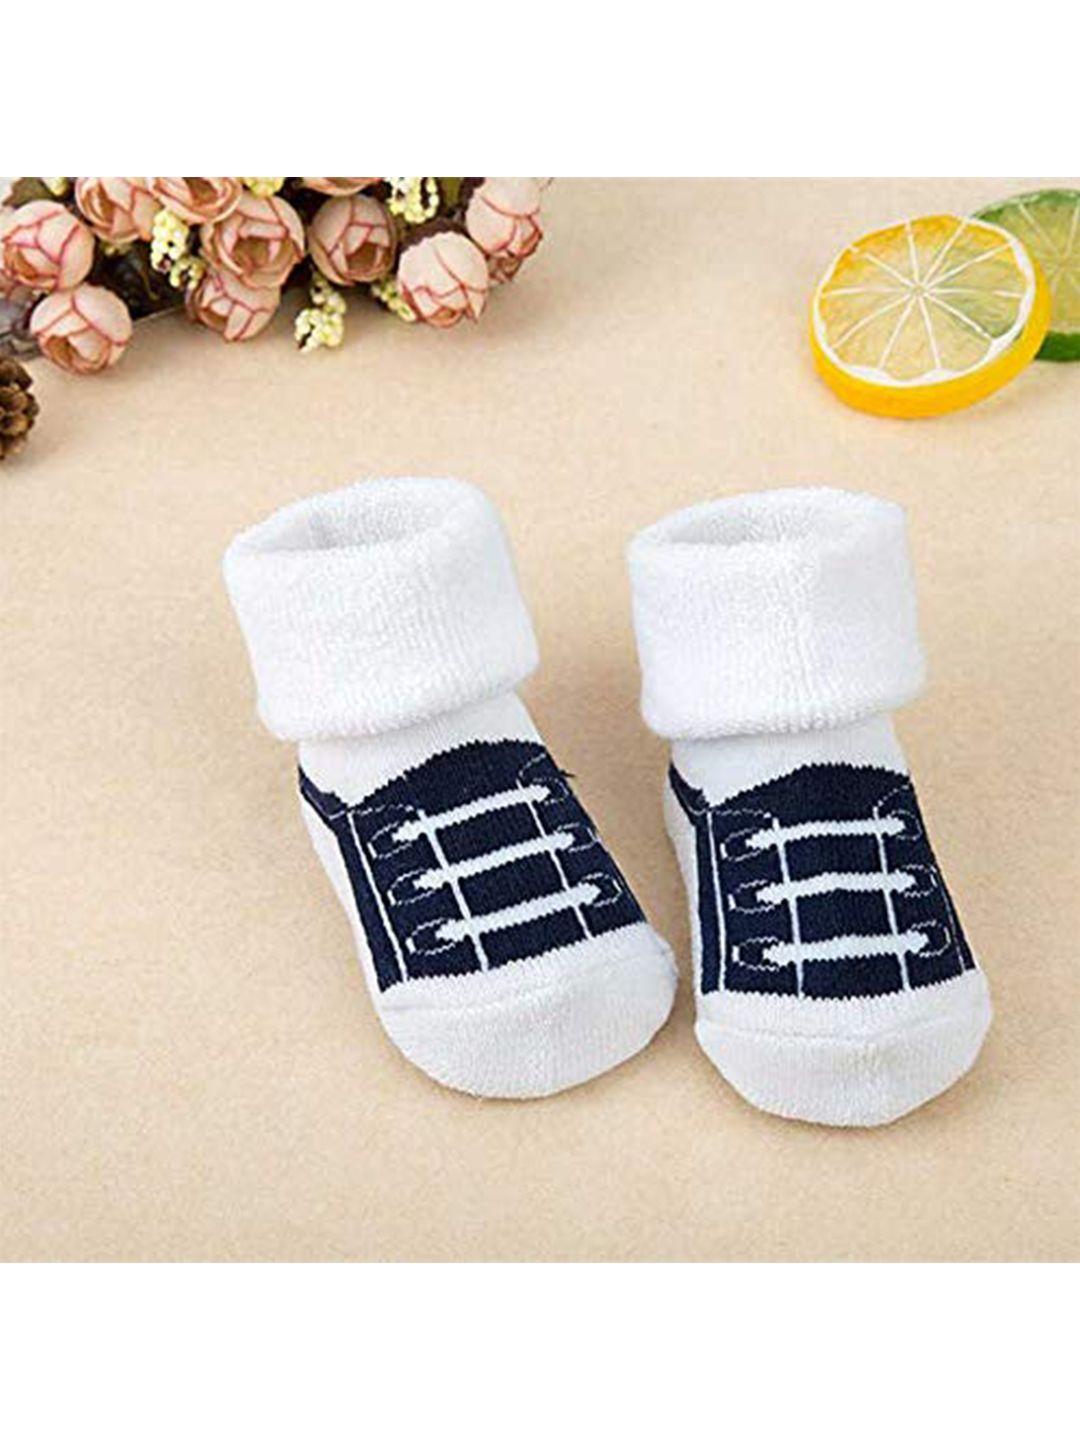 syga kids set of 3 navy blue & white ankle-length patterned socks